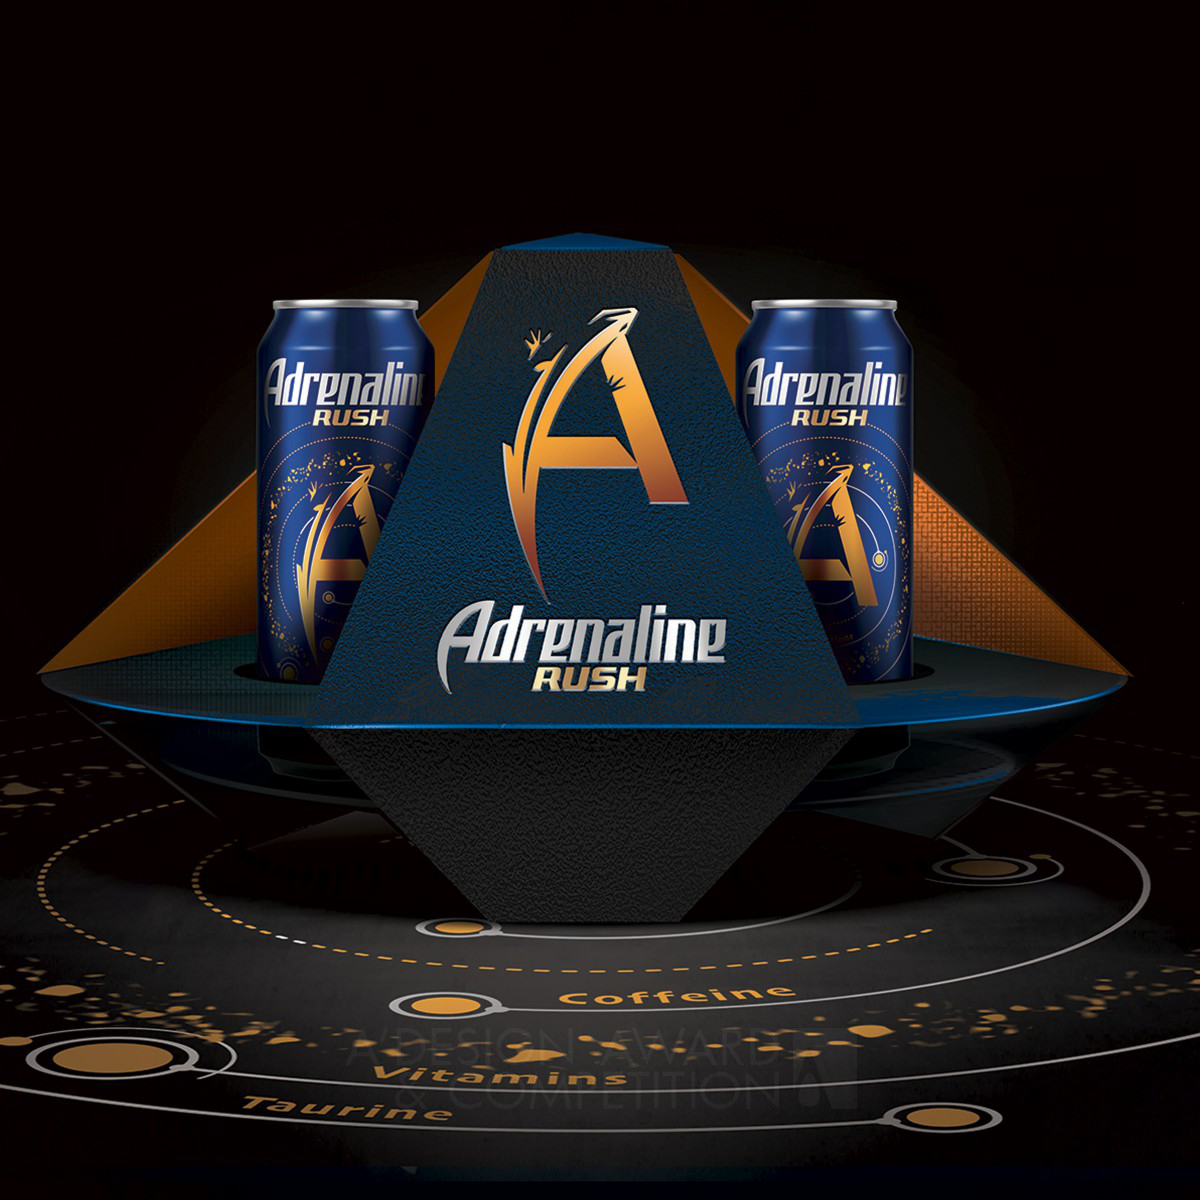 Adrenaline Space Beverage by PepsiCo Design & Innovation